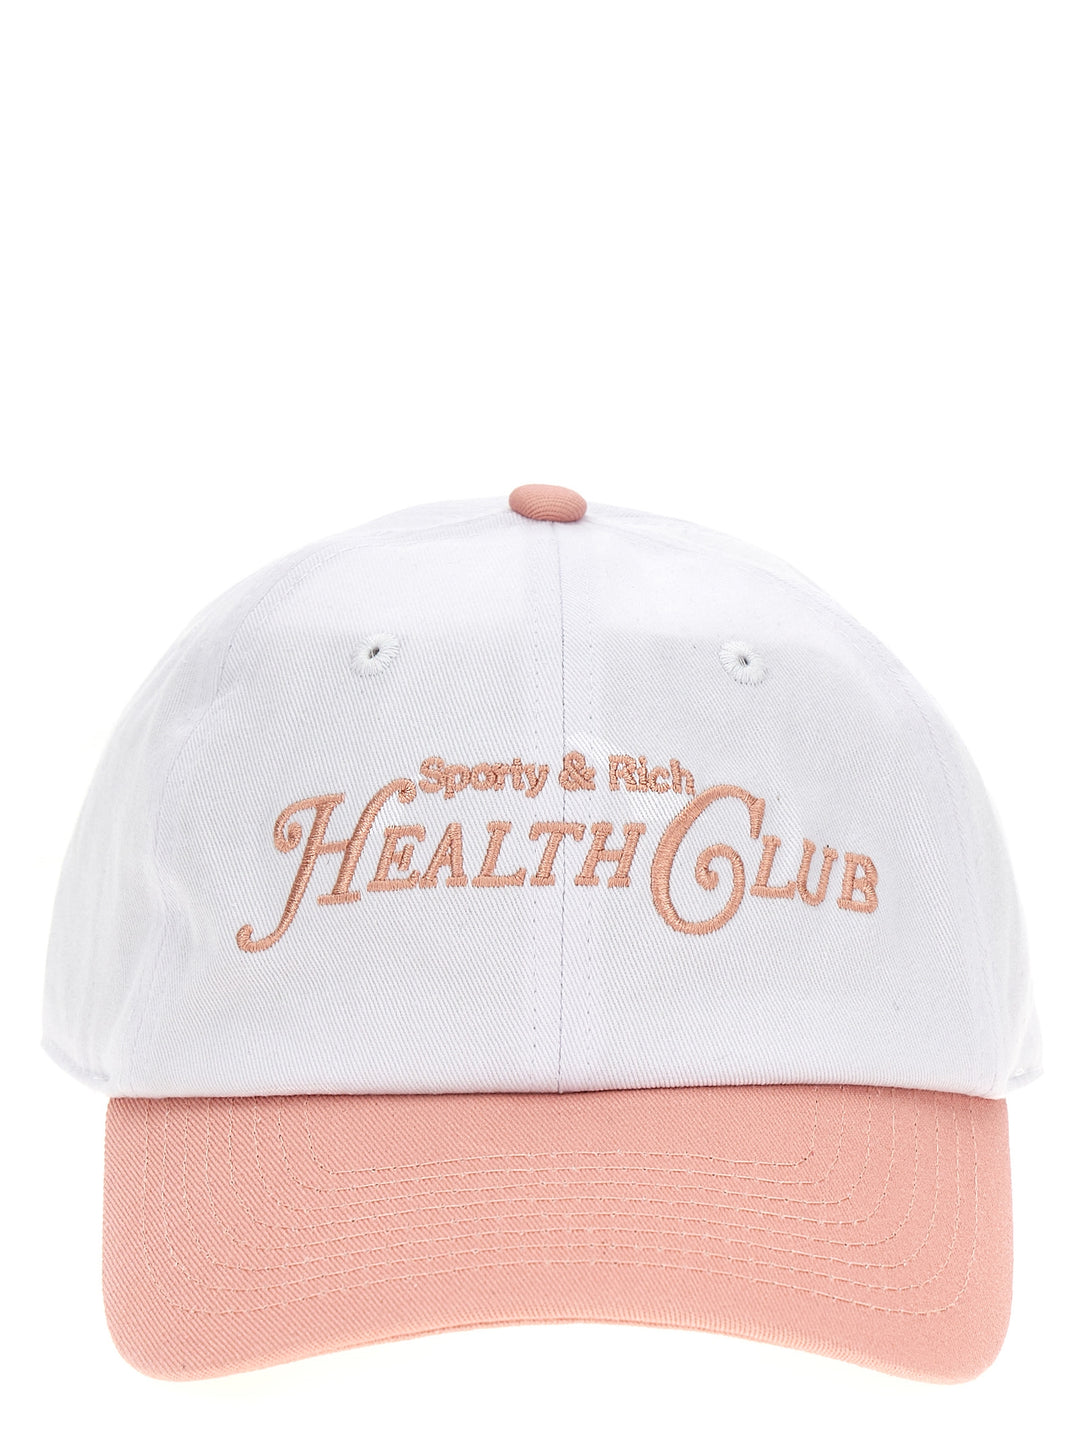 Health Club Cappelli Multicolor